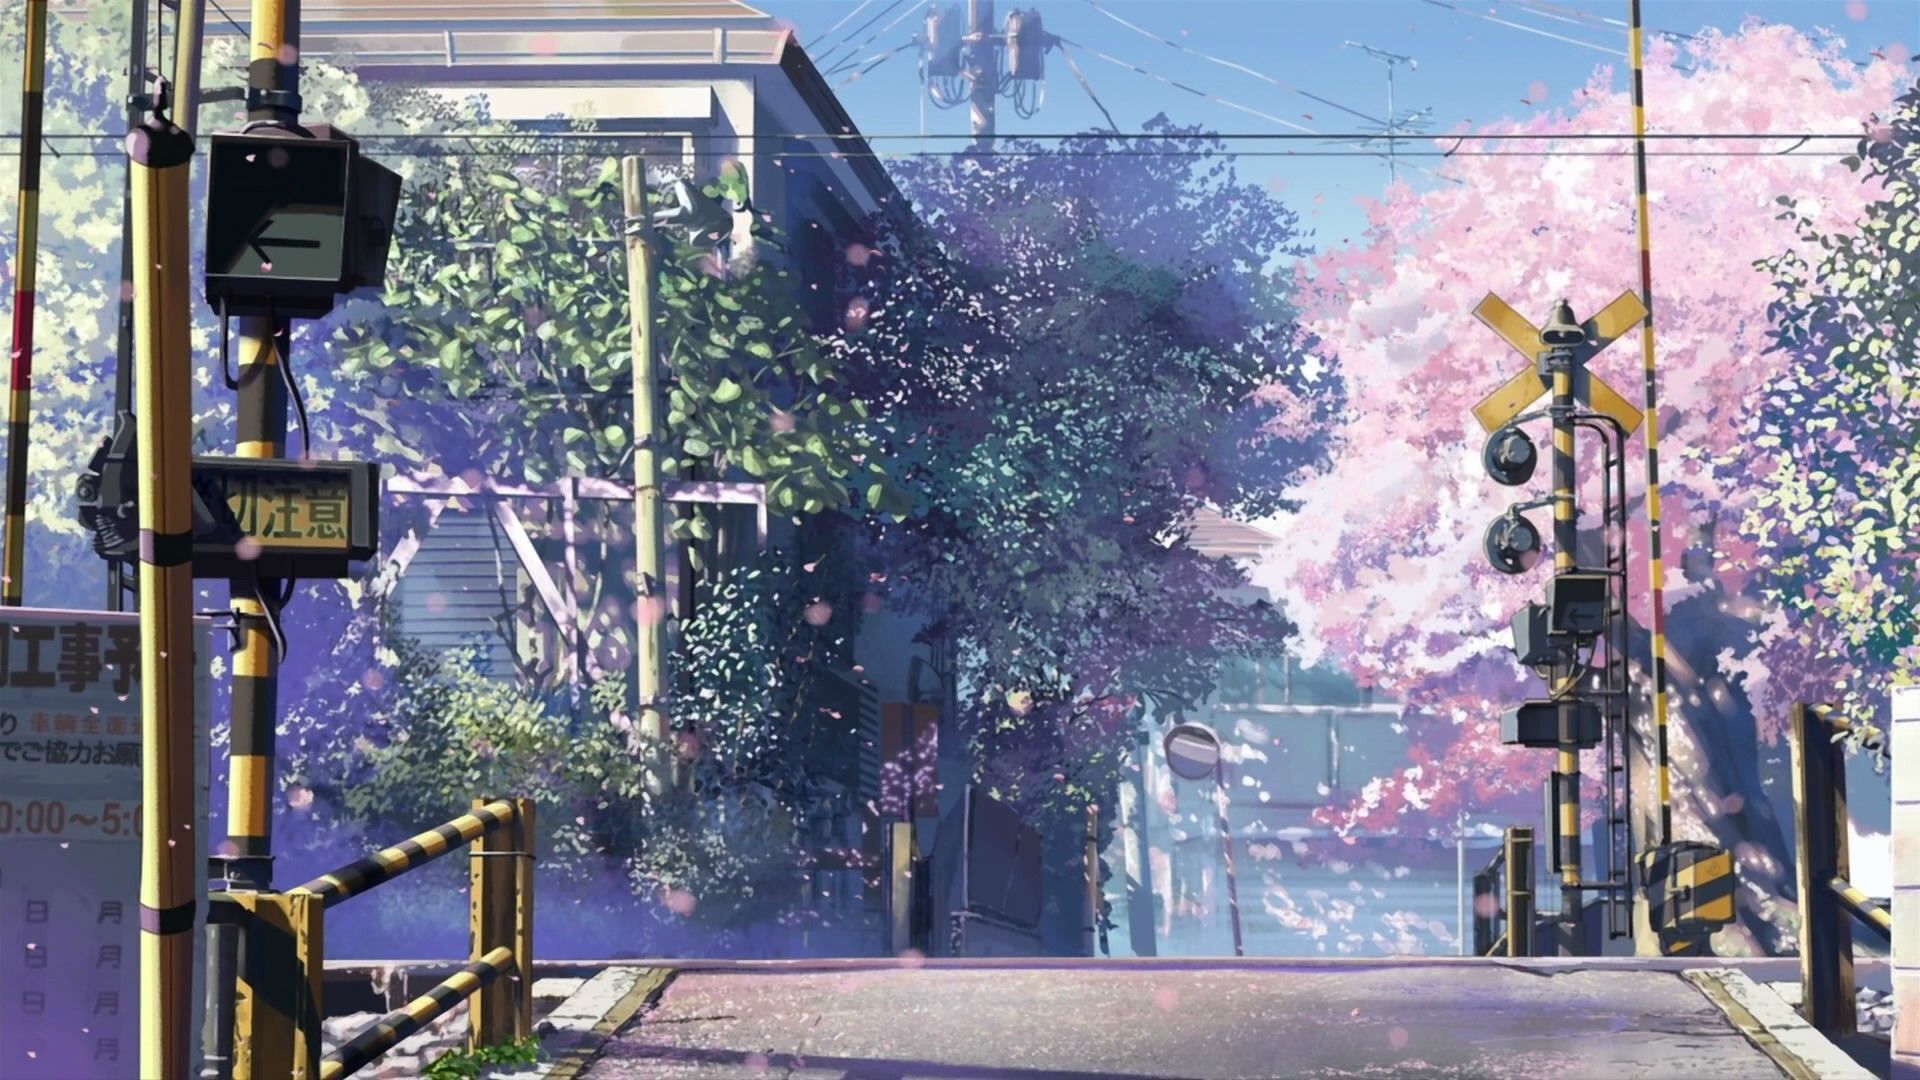 Anime Landscape HD Wallpaper by Uomi